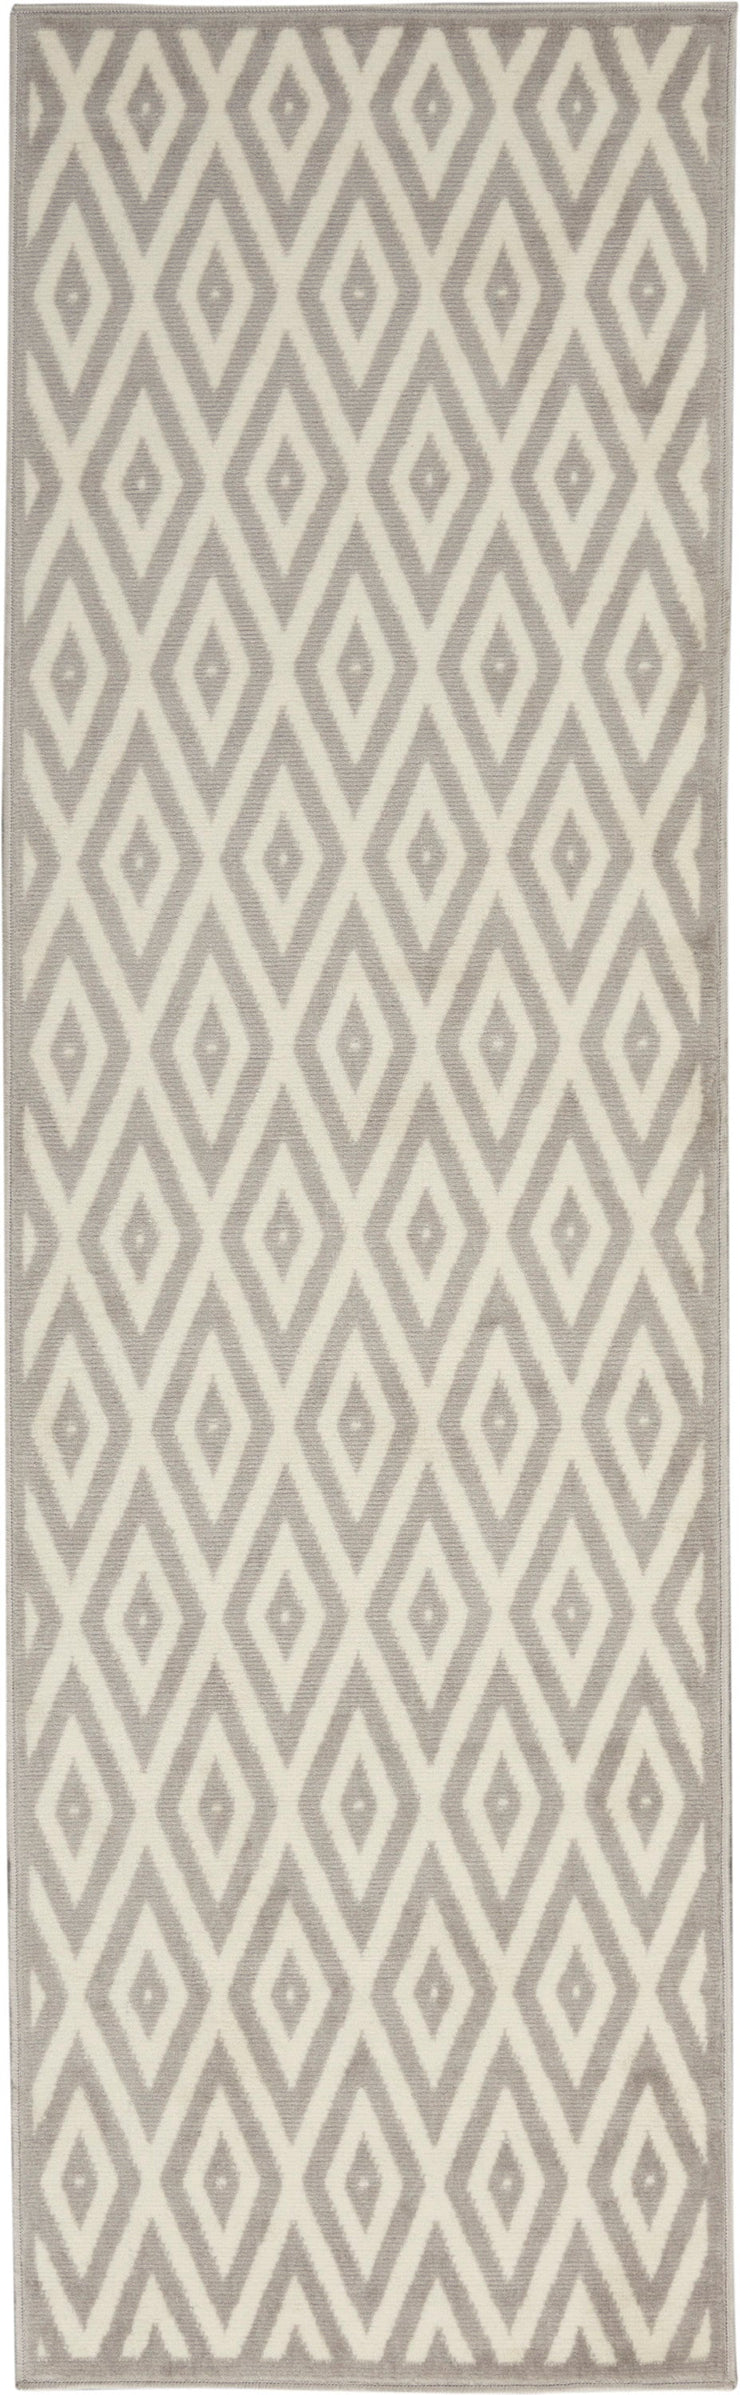 grafix white grey rug by nourison 99446810267 redo 3